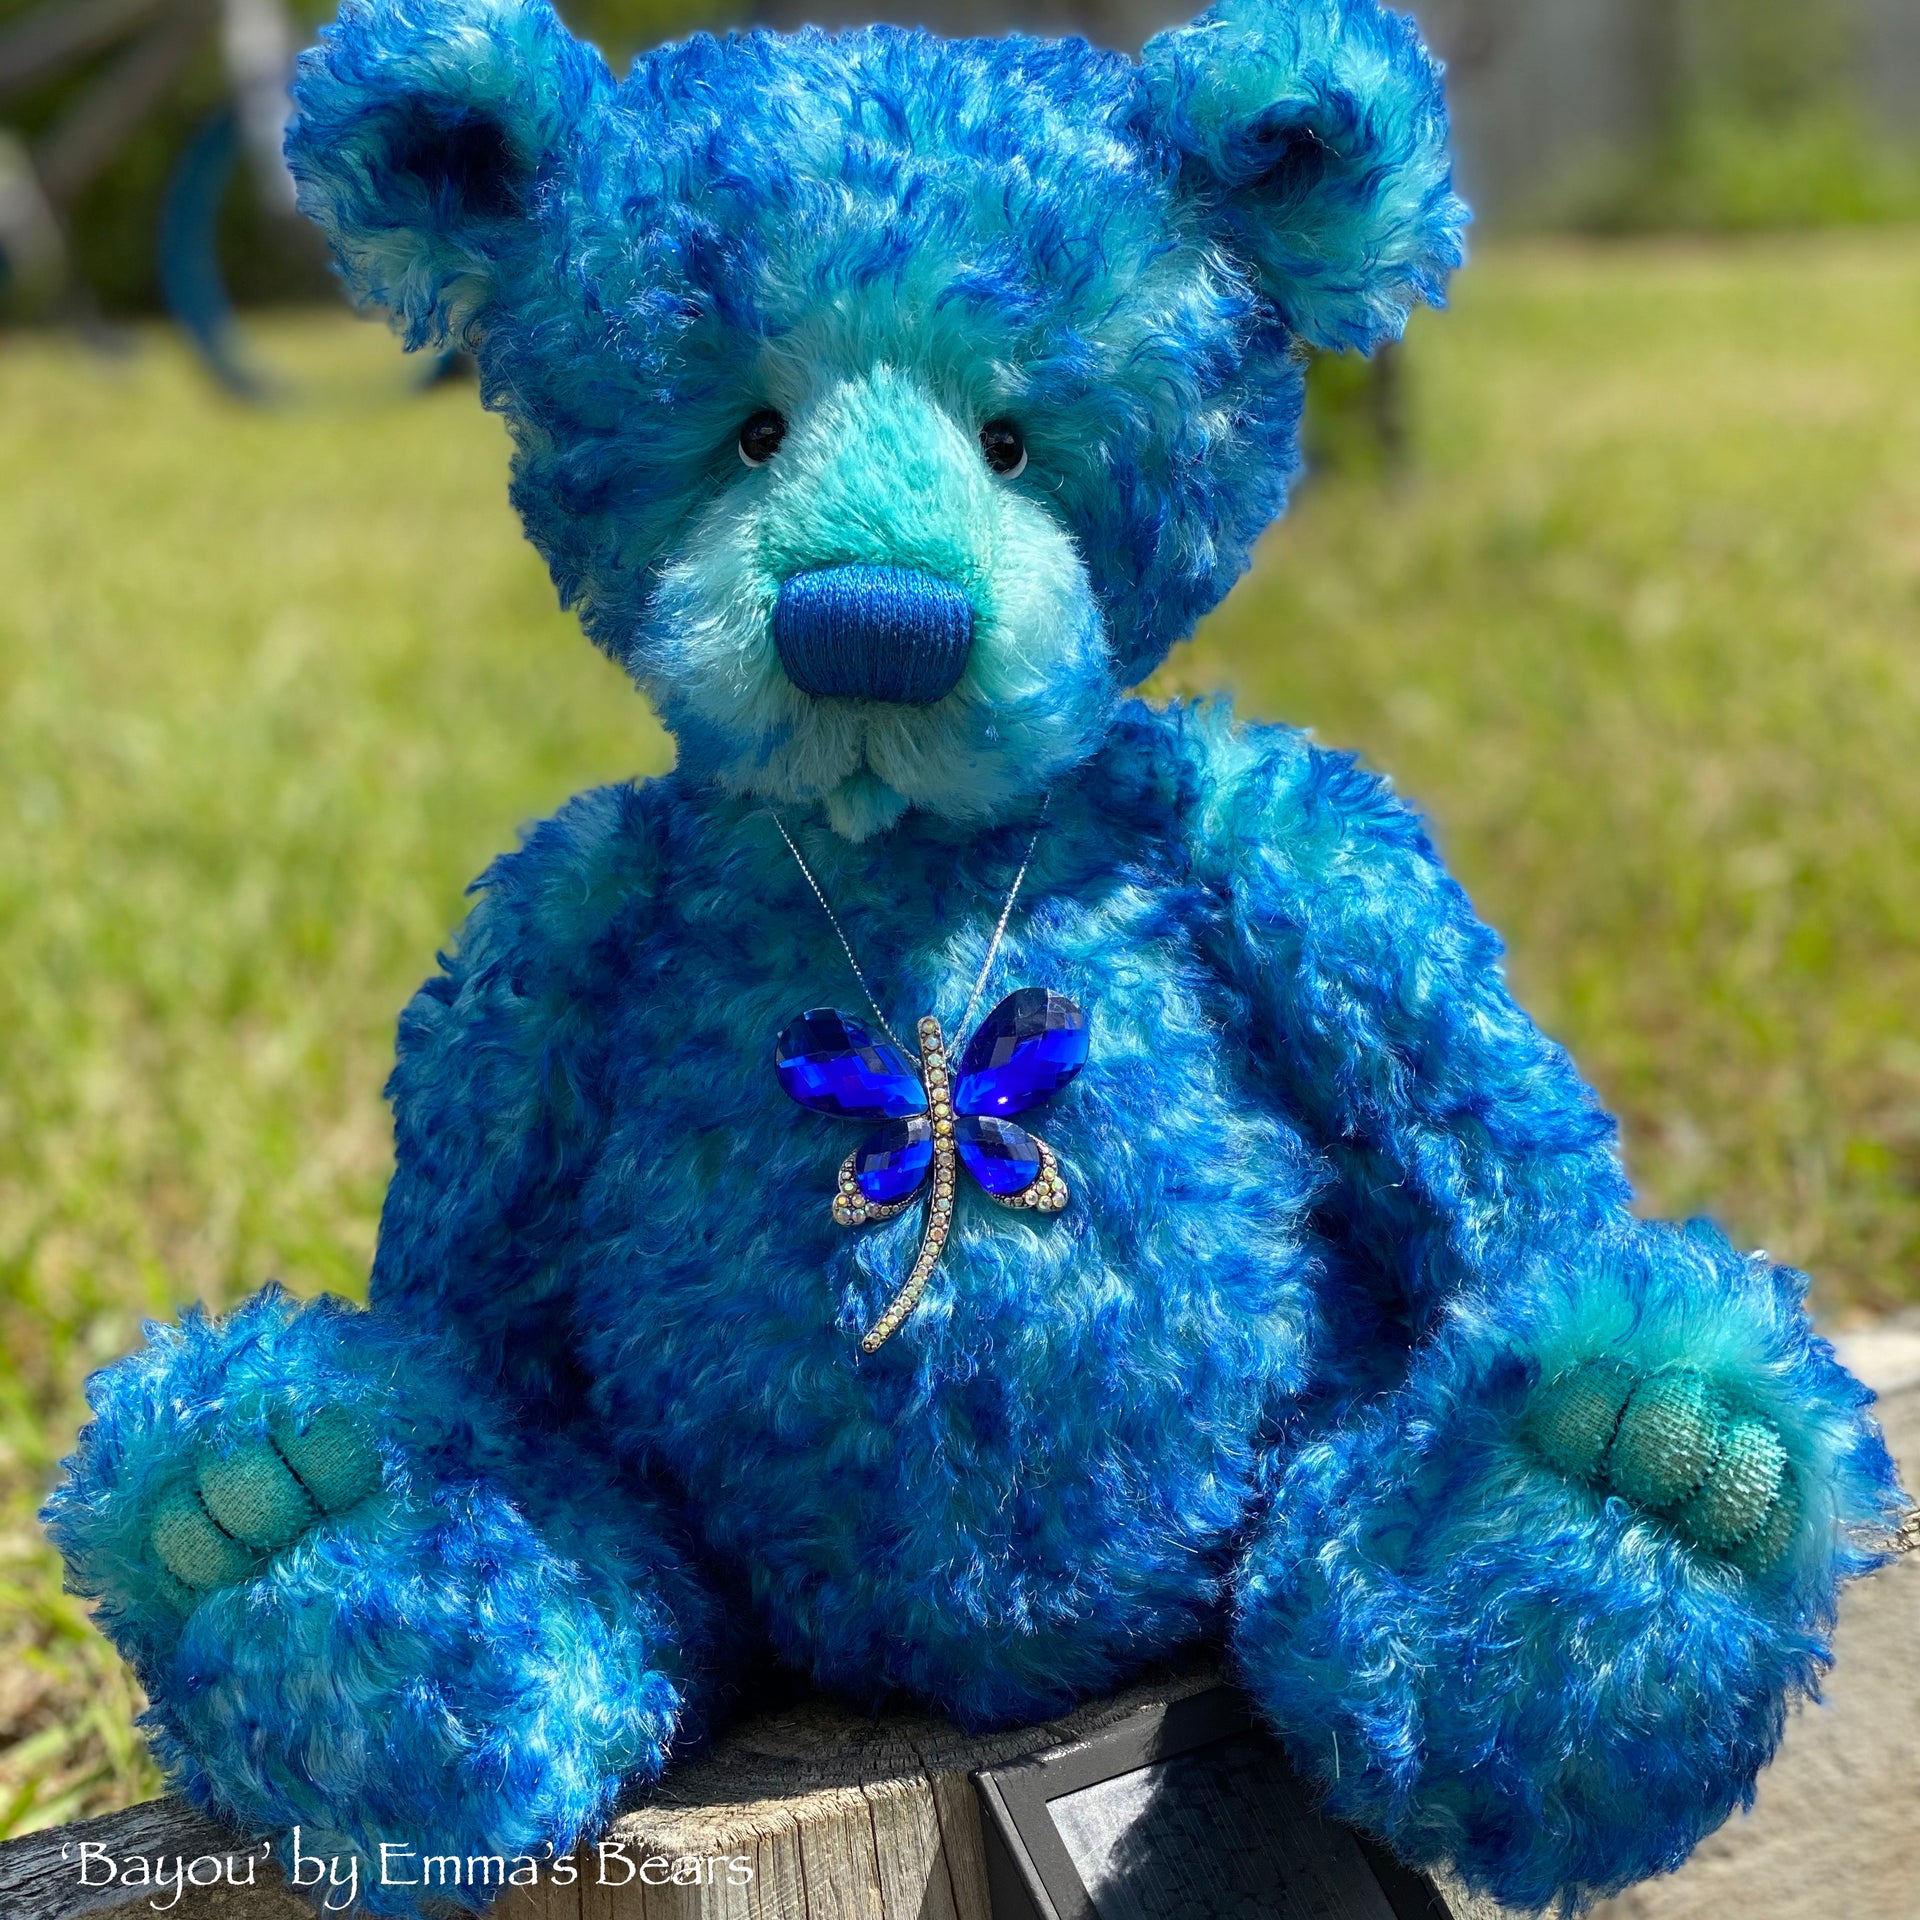 Bayou - 17" curly kid mohair bear by Emmas Bears - OOAK